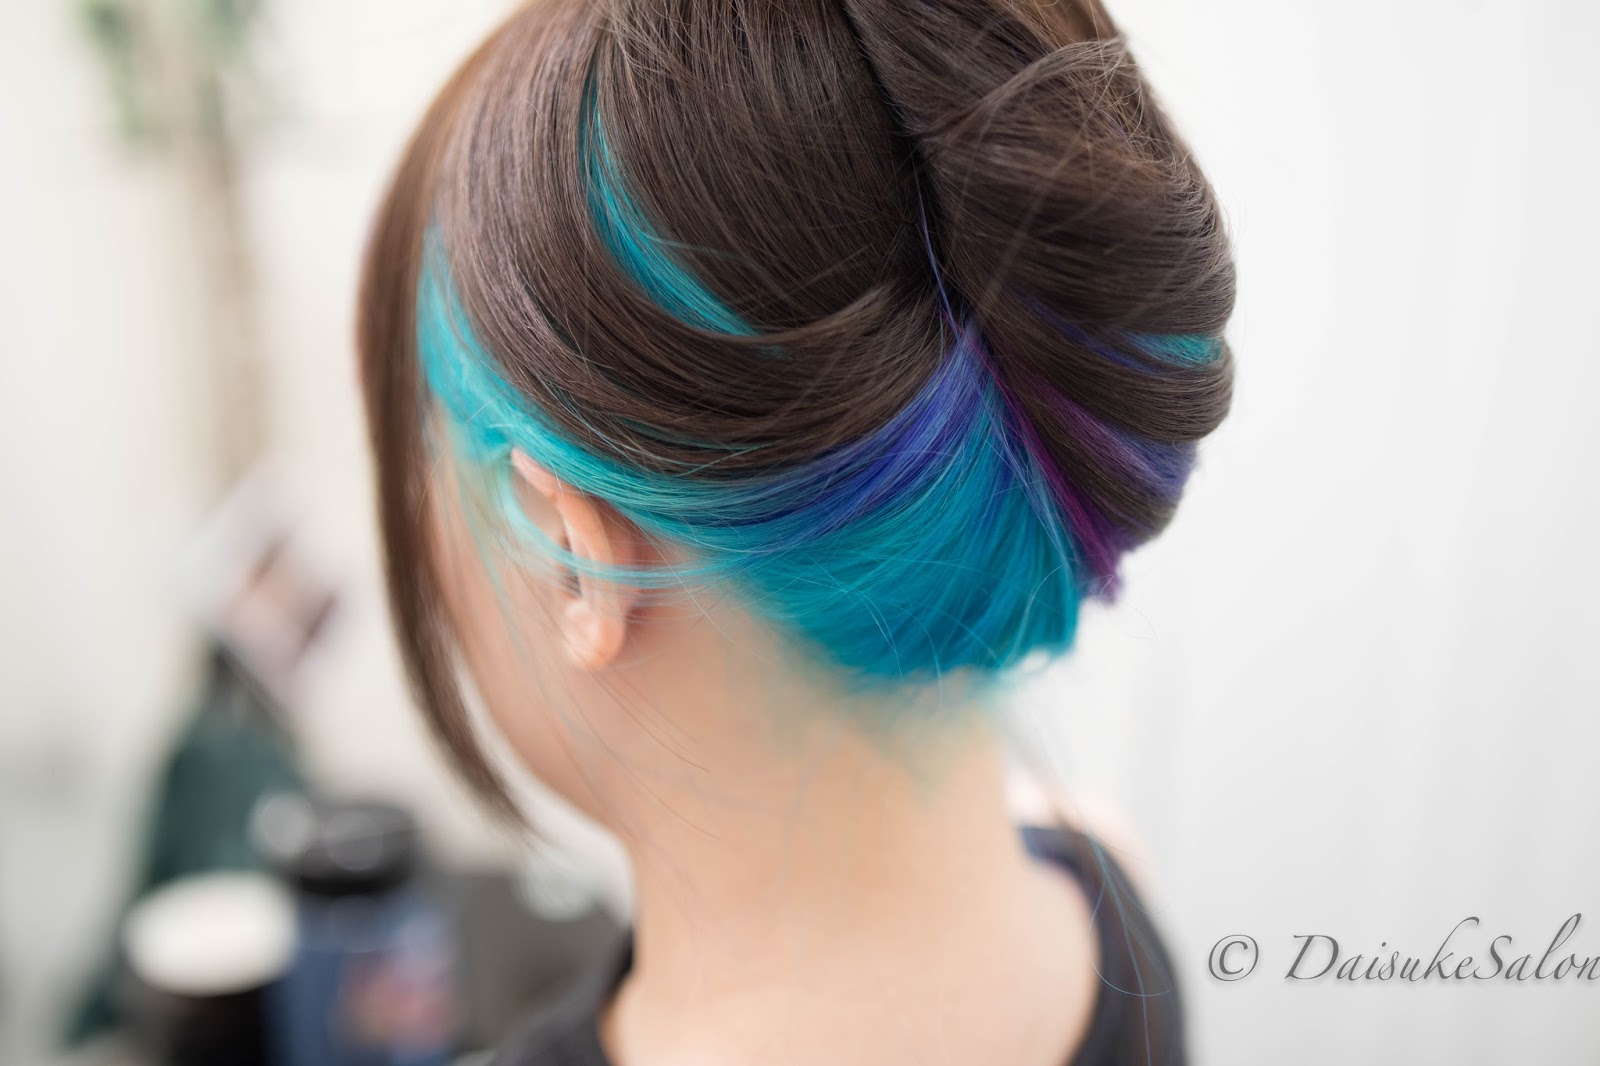 Colour Player - Cosmic Galaxy Hair